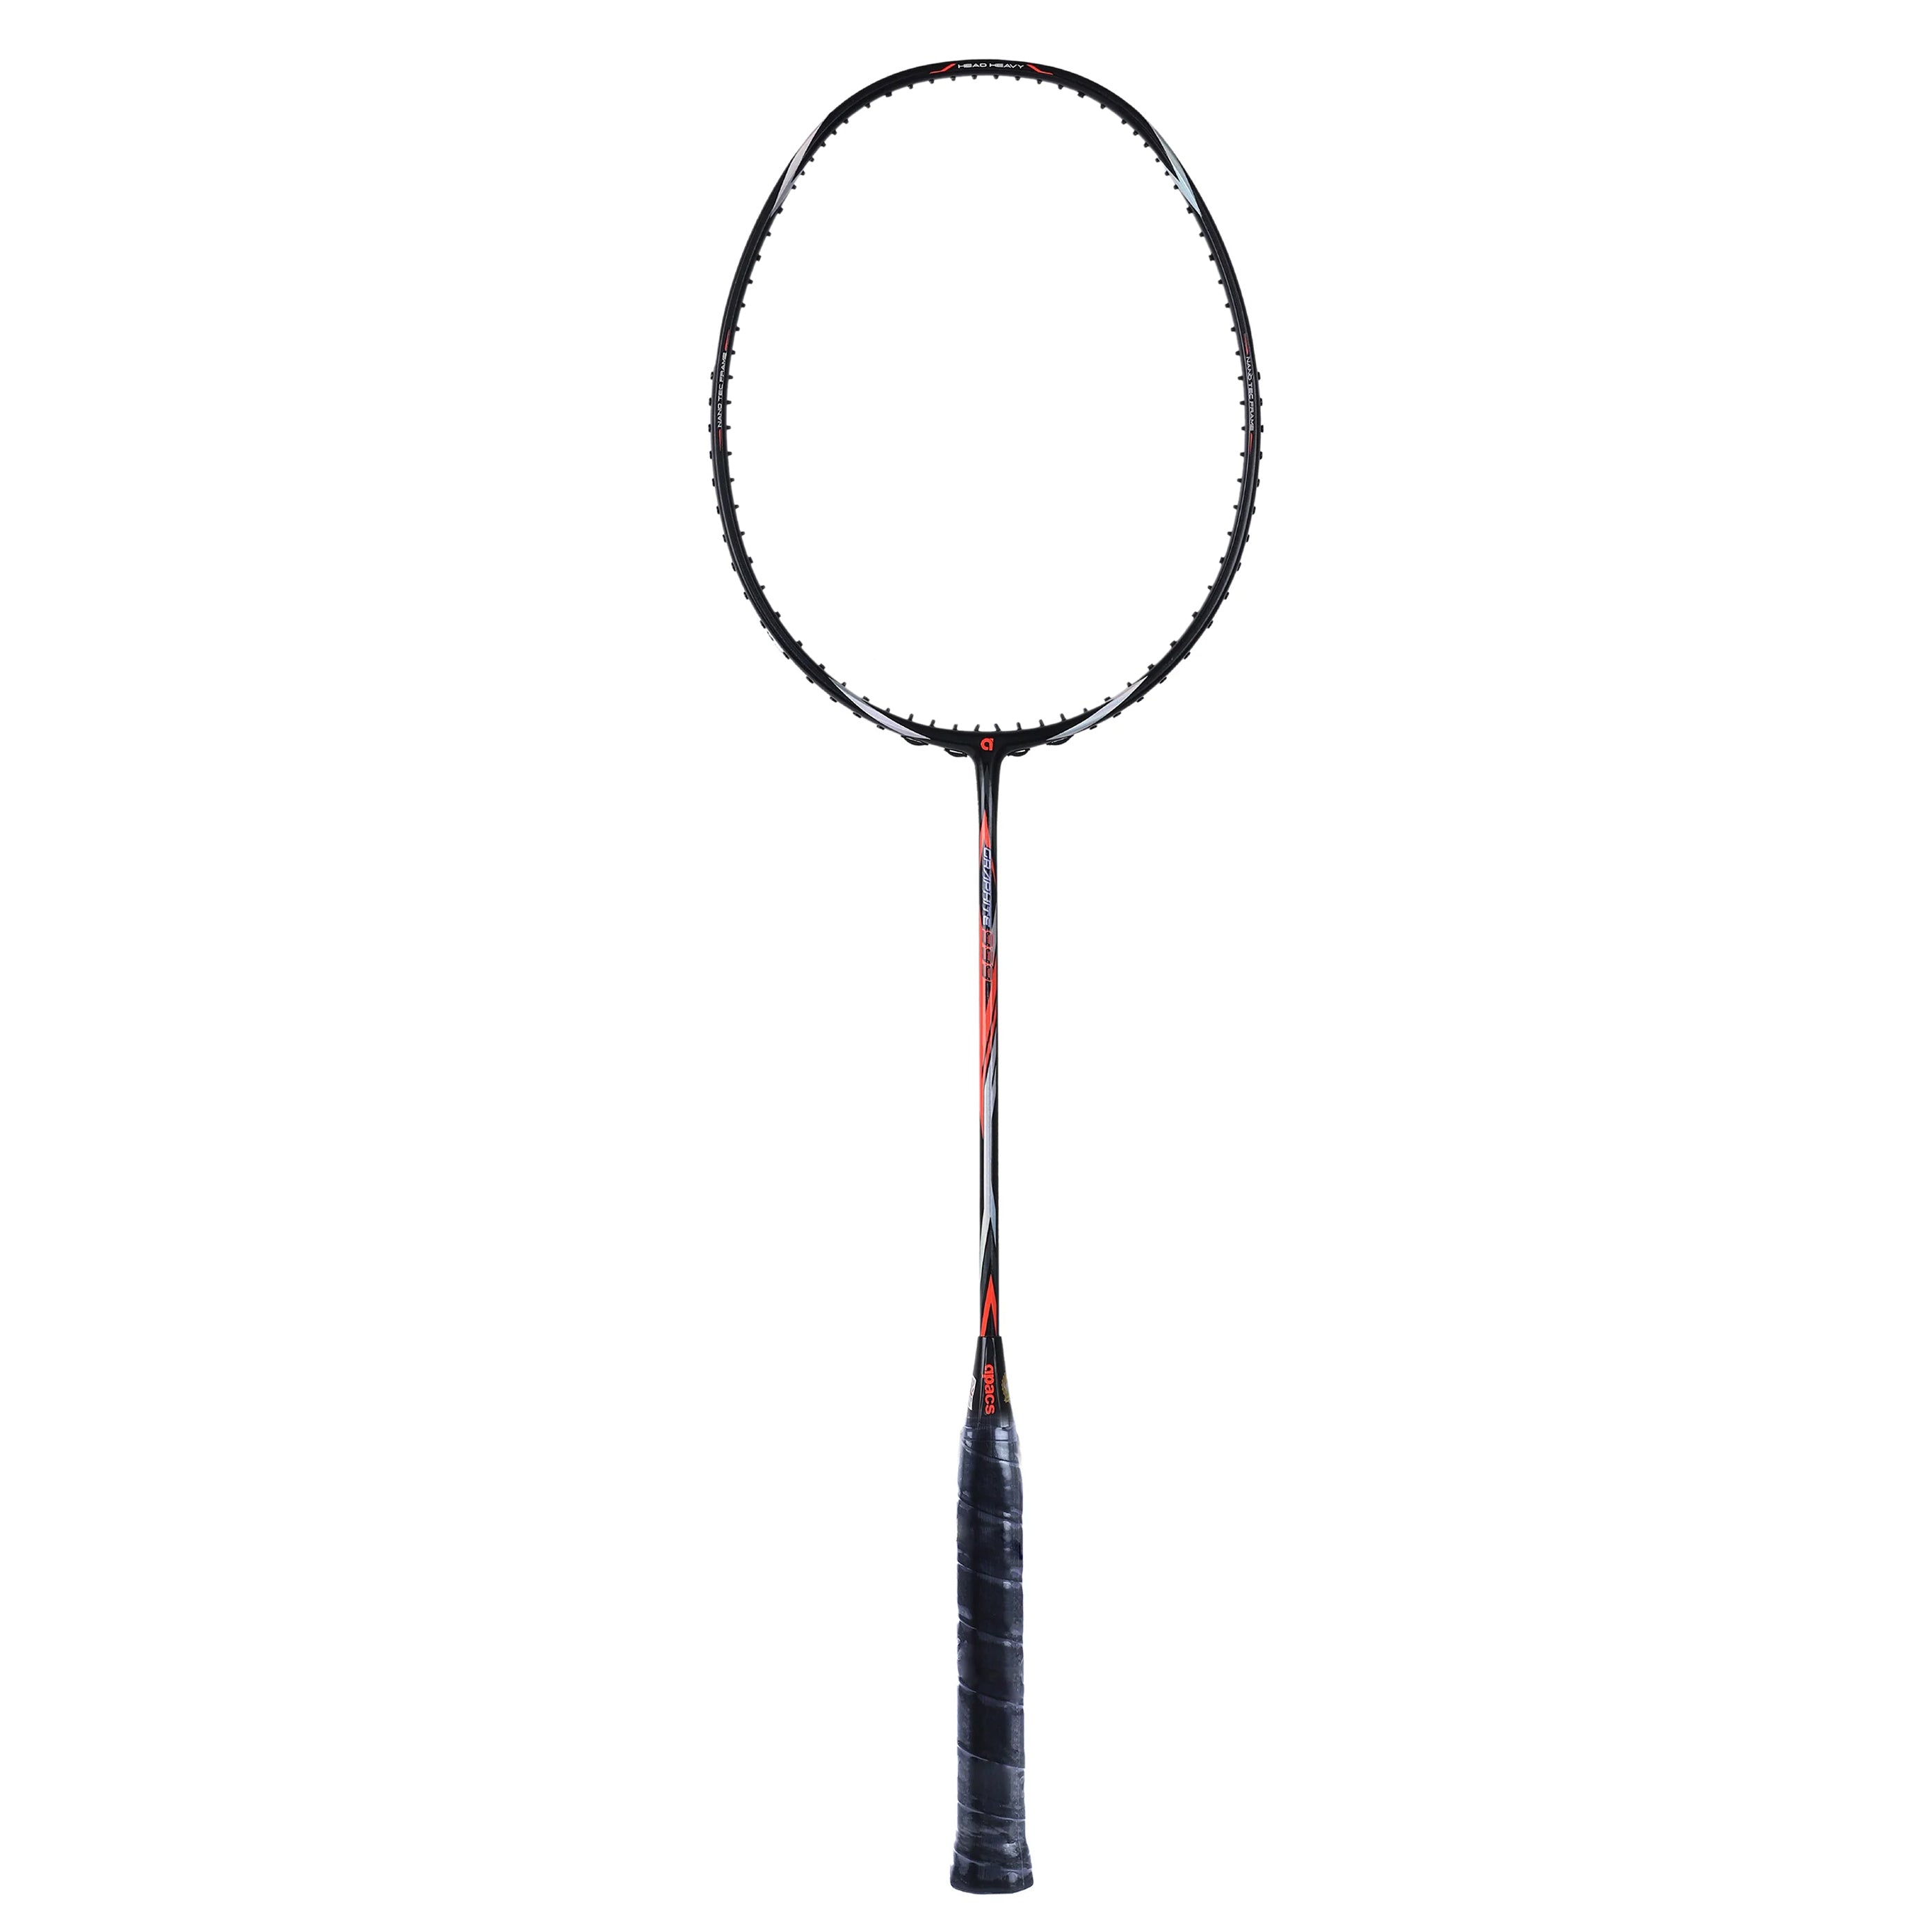 Apacs Graphite 999 Badminton Racket